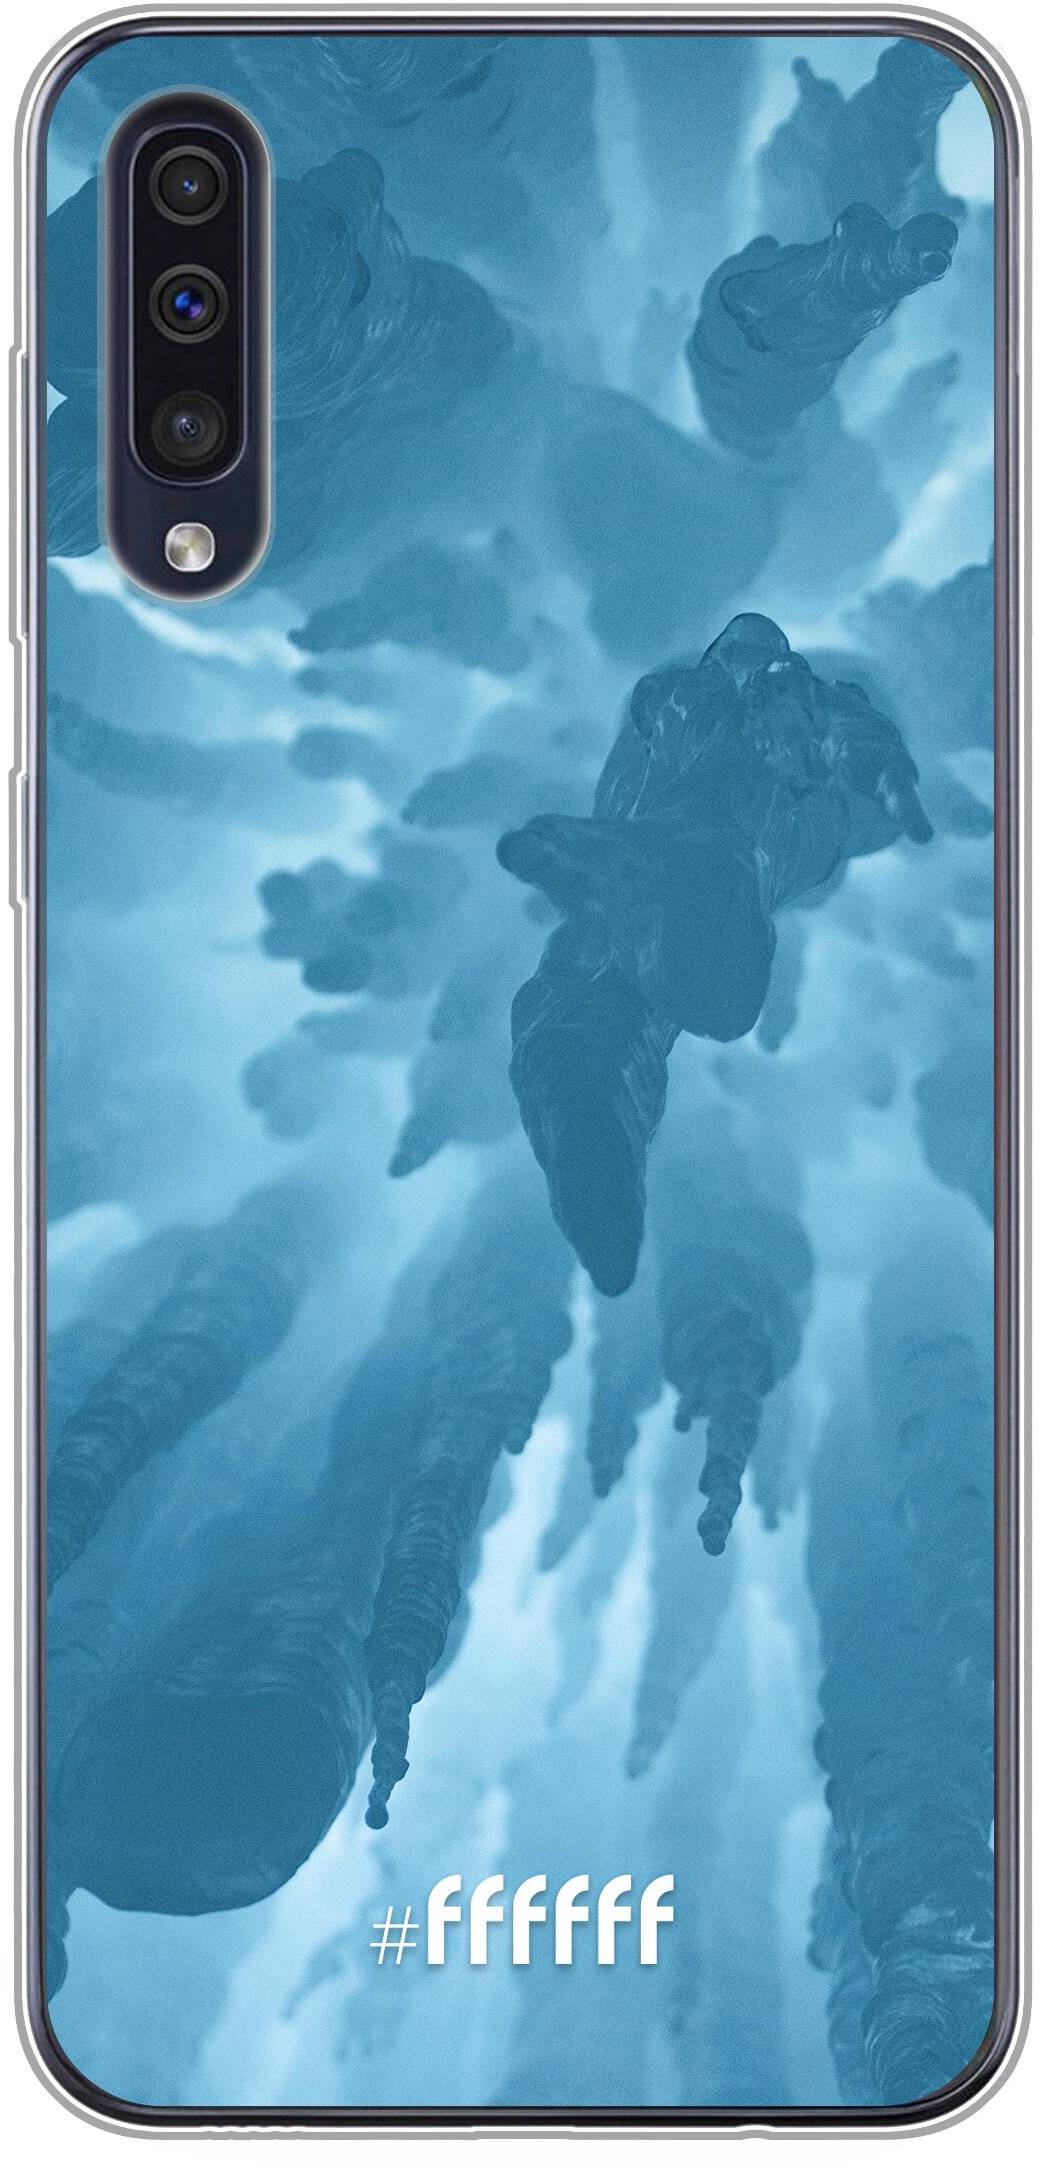 Ice Stalactite Galaxy A50s